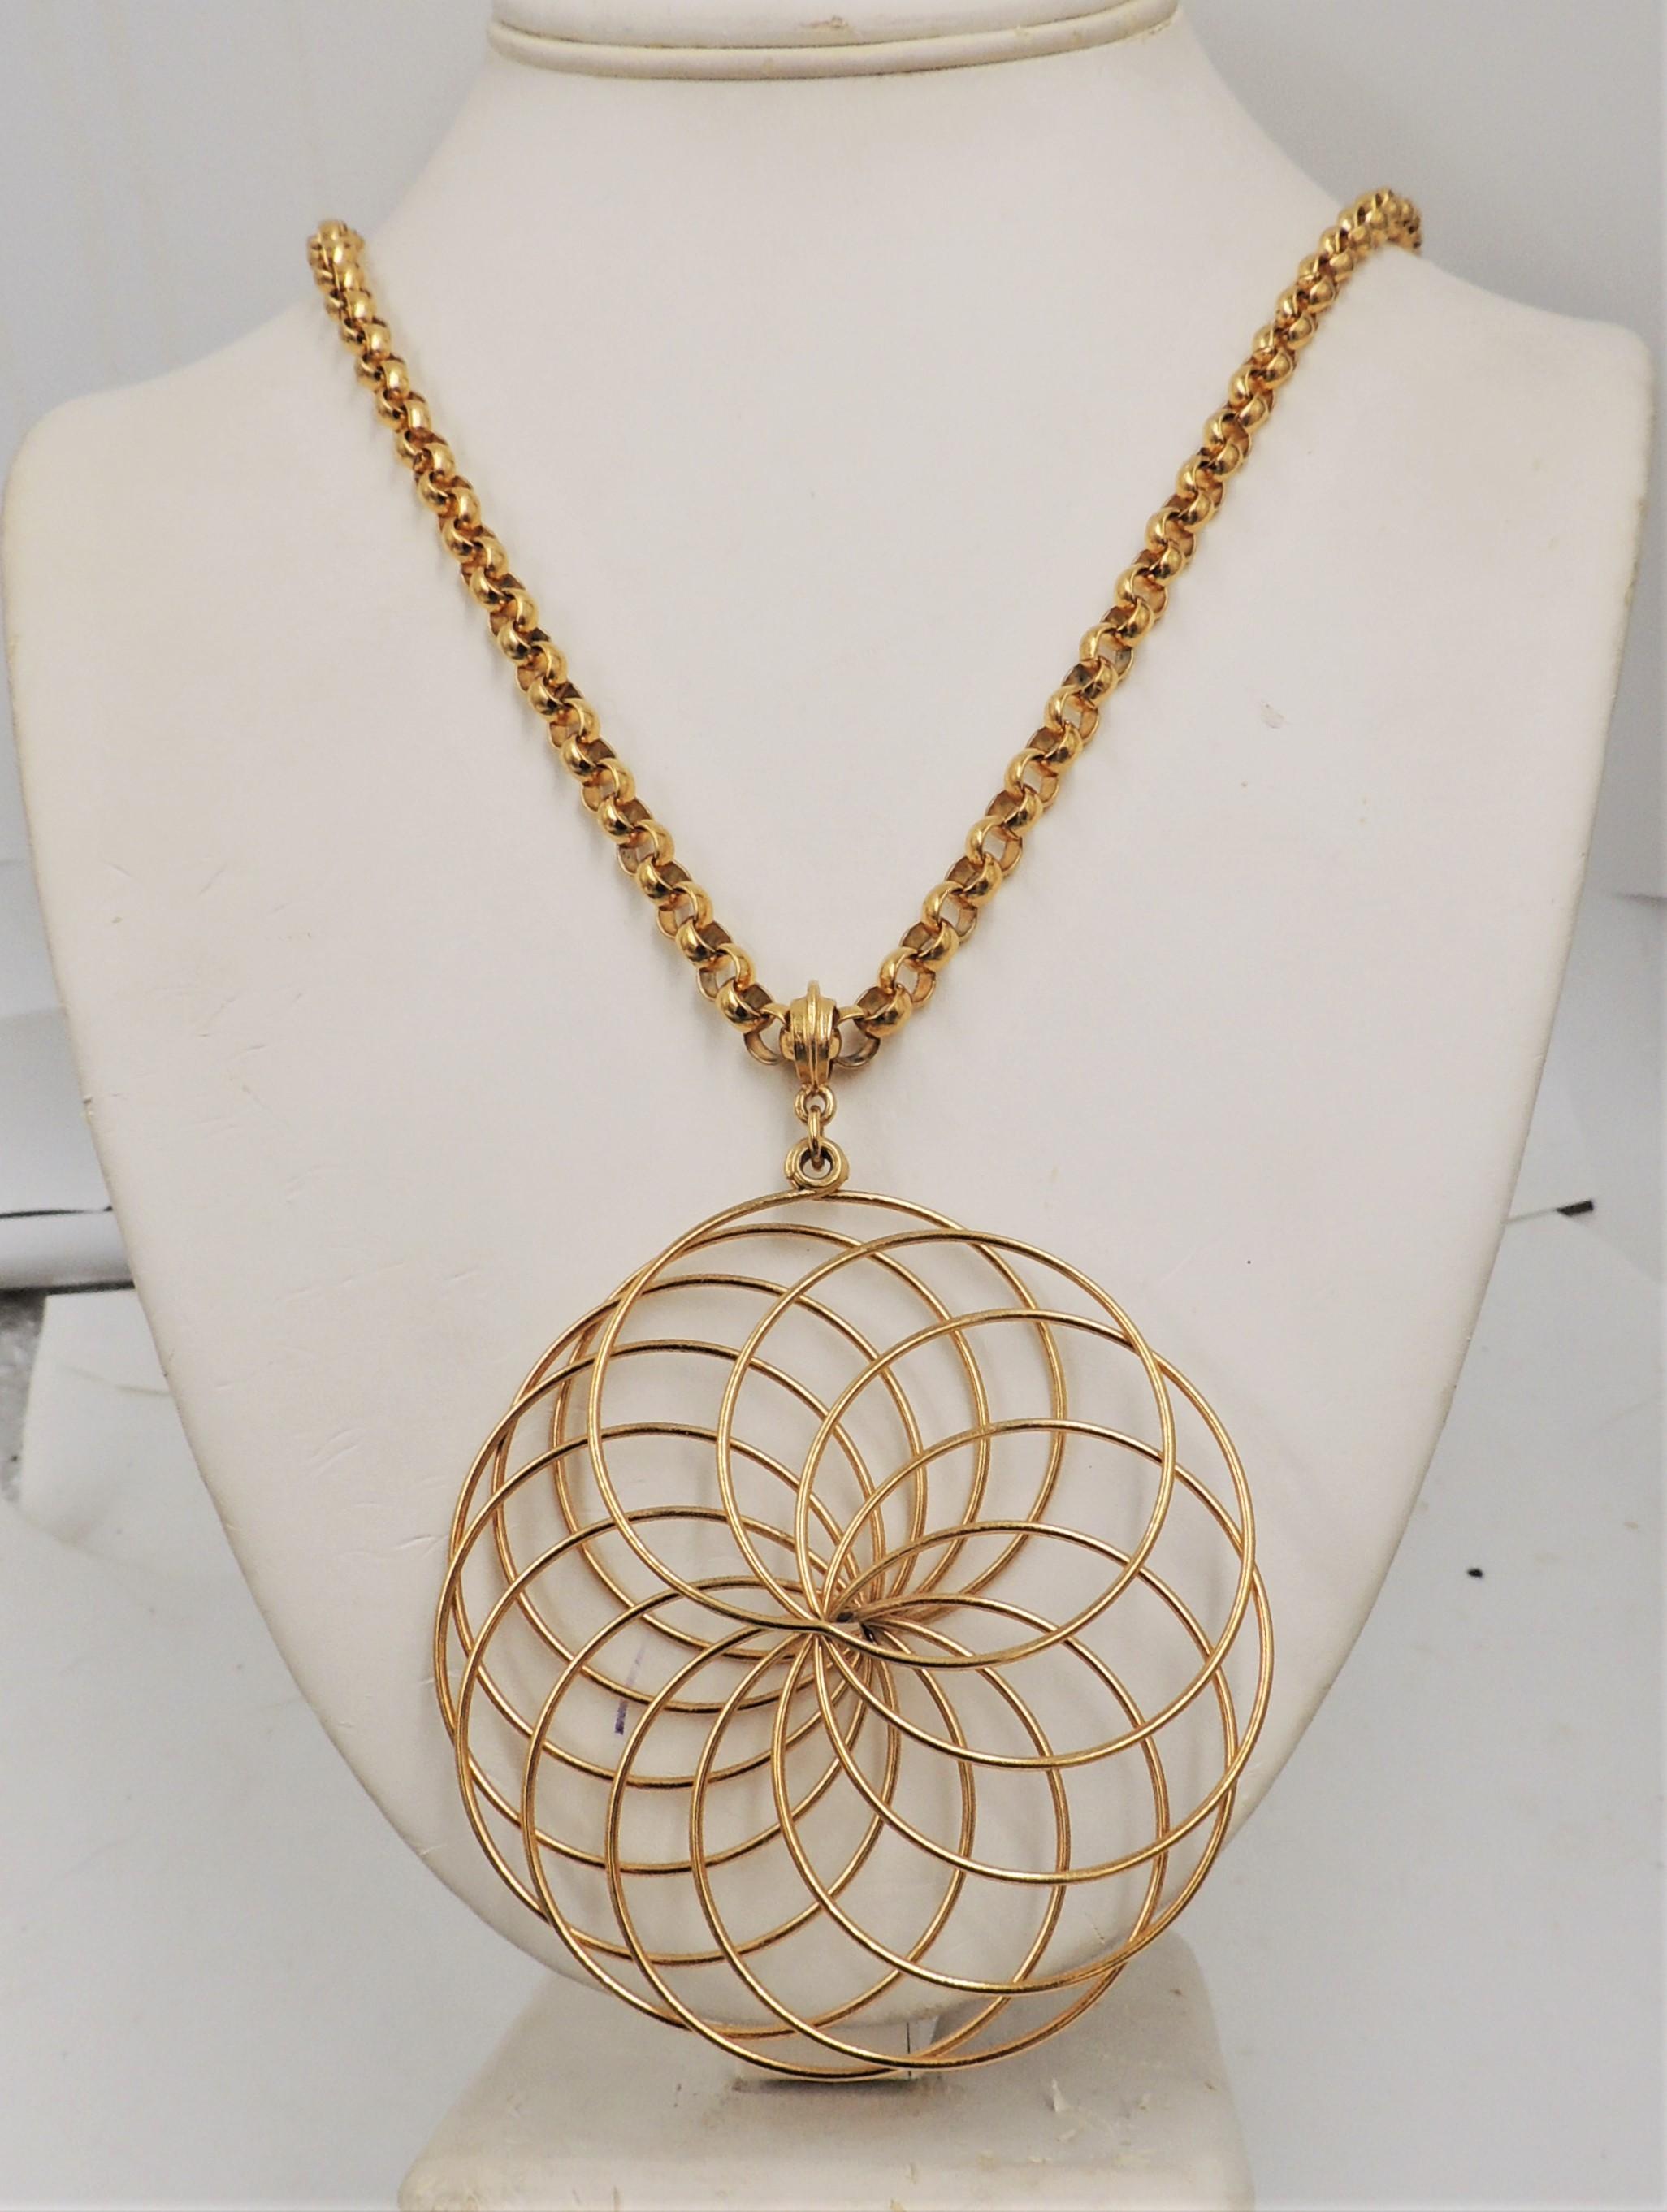 Vintage Signed Crown Trifari Goldtone Spiral Pendant Necklace, 1974 Ad Piece For Sale 6